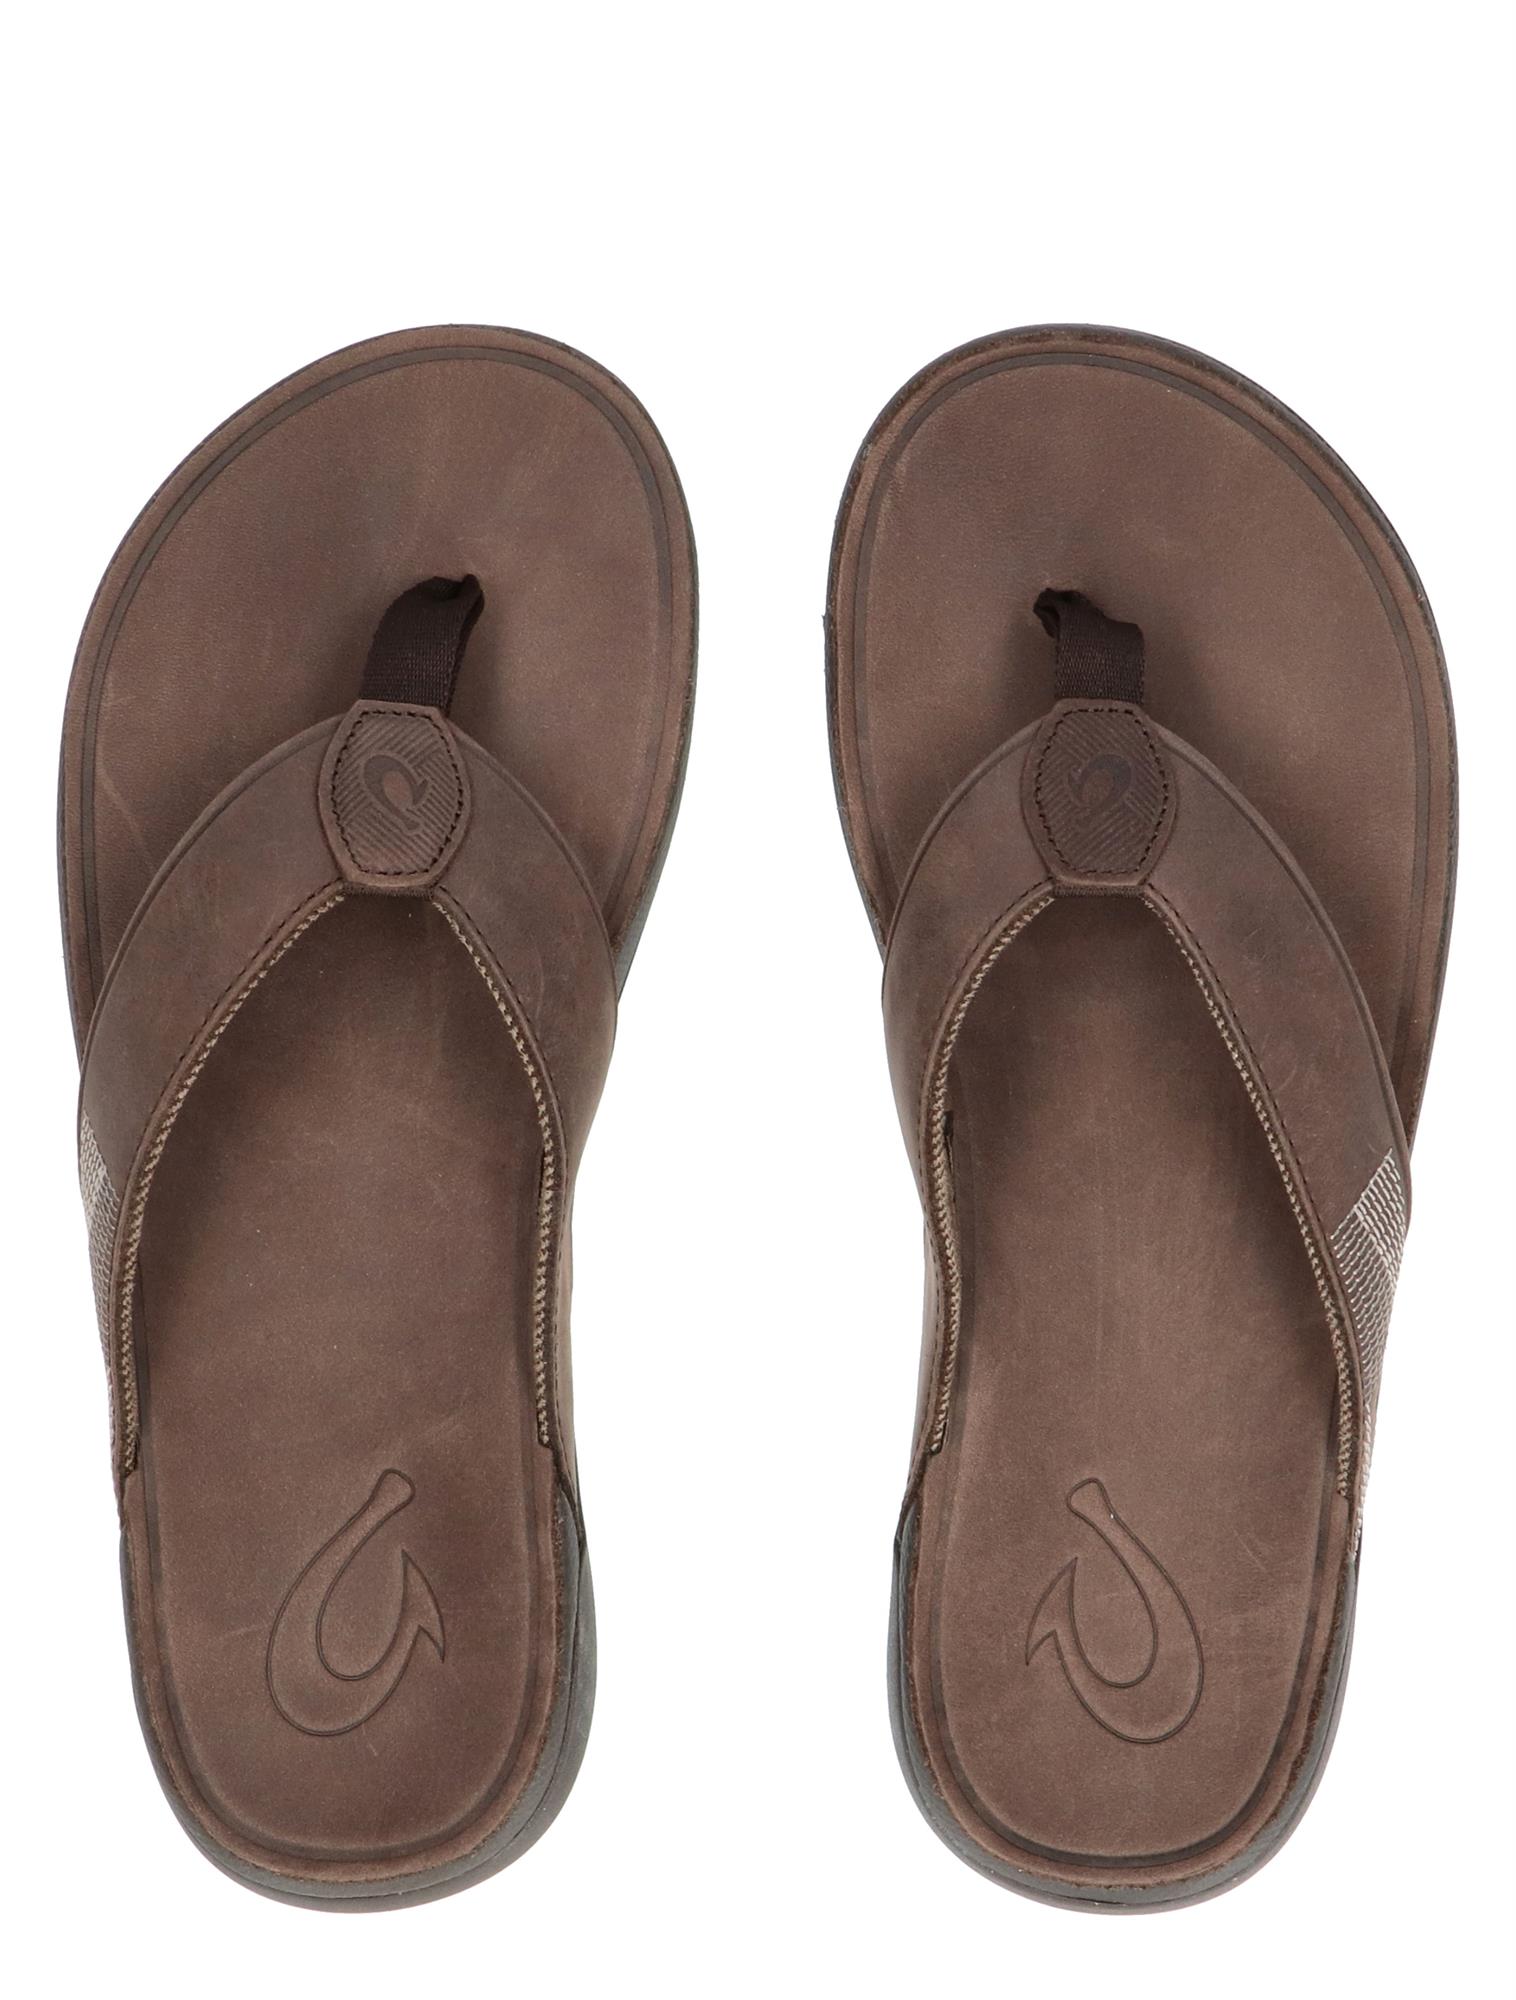 OLUKAI Nui Men's Beach Sandals, Full Grain Leather Flip-Flop Slides,  Compression Molded Footbed & Ultra-Soft Comfort Fit